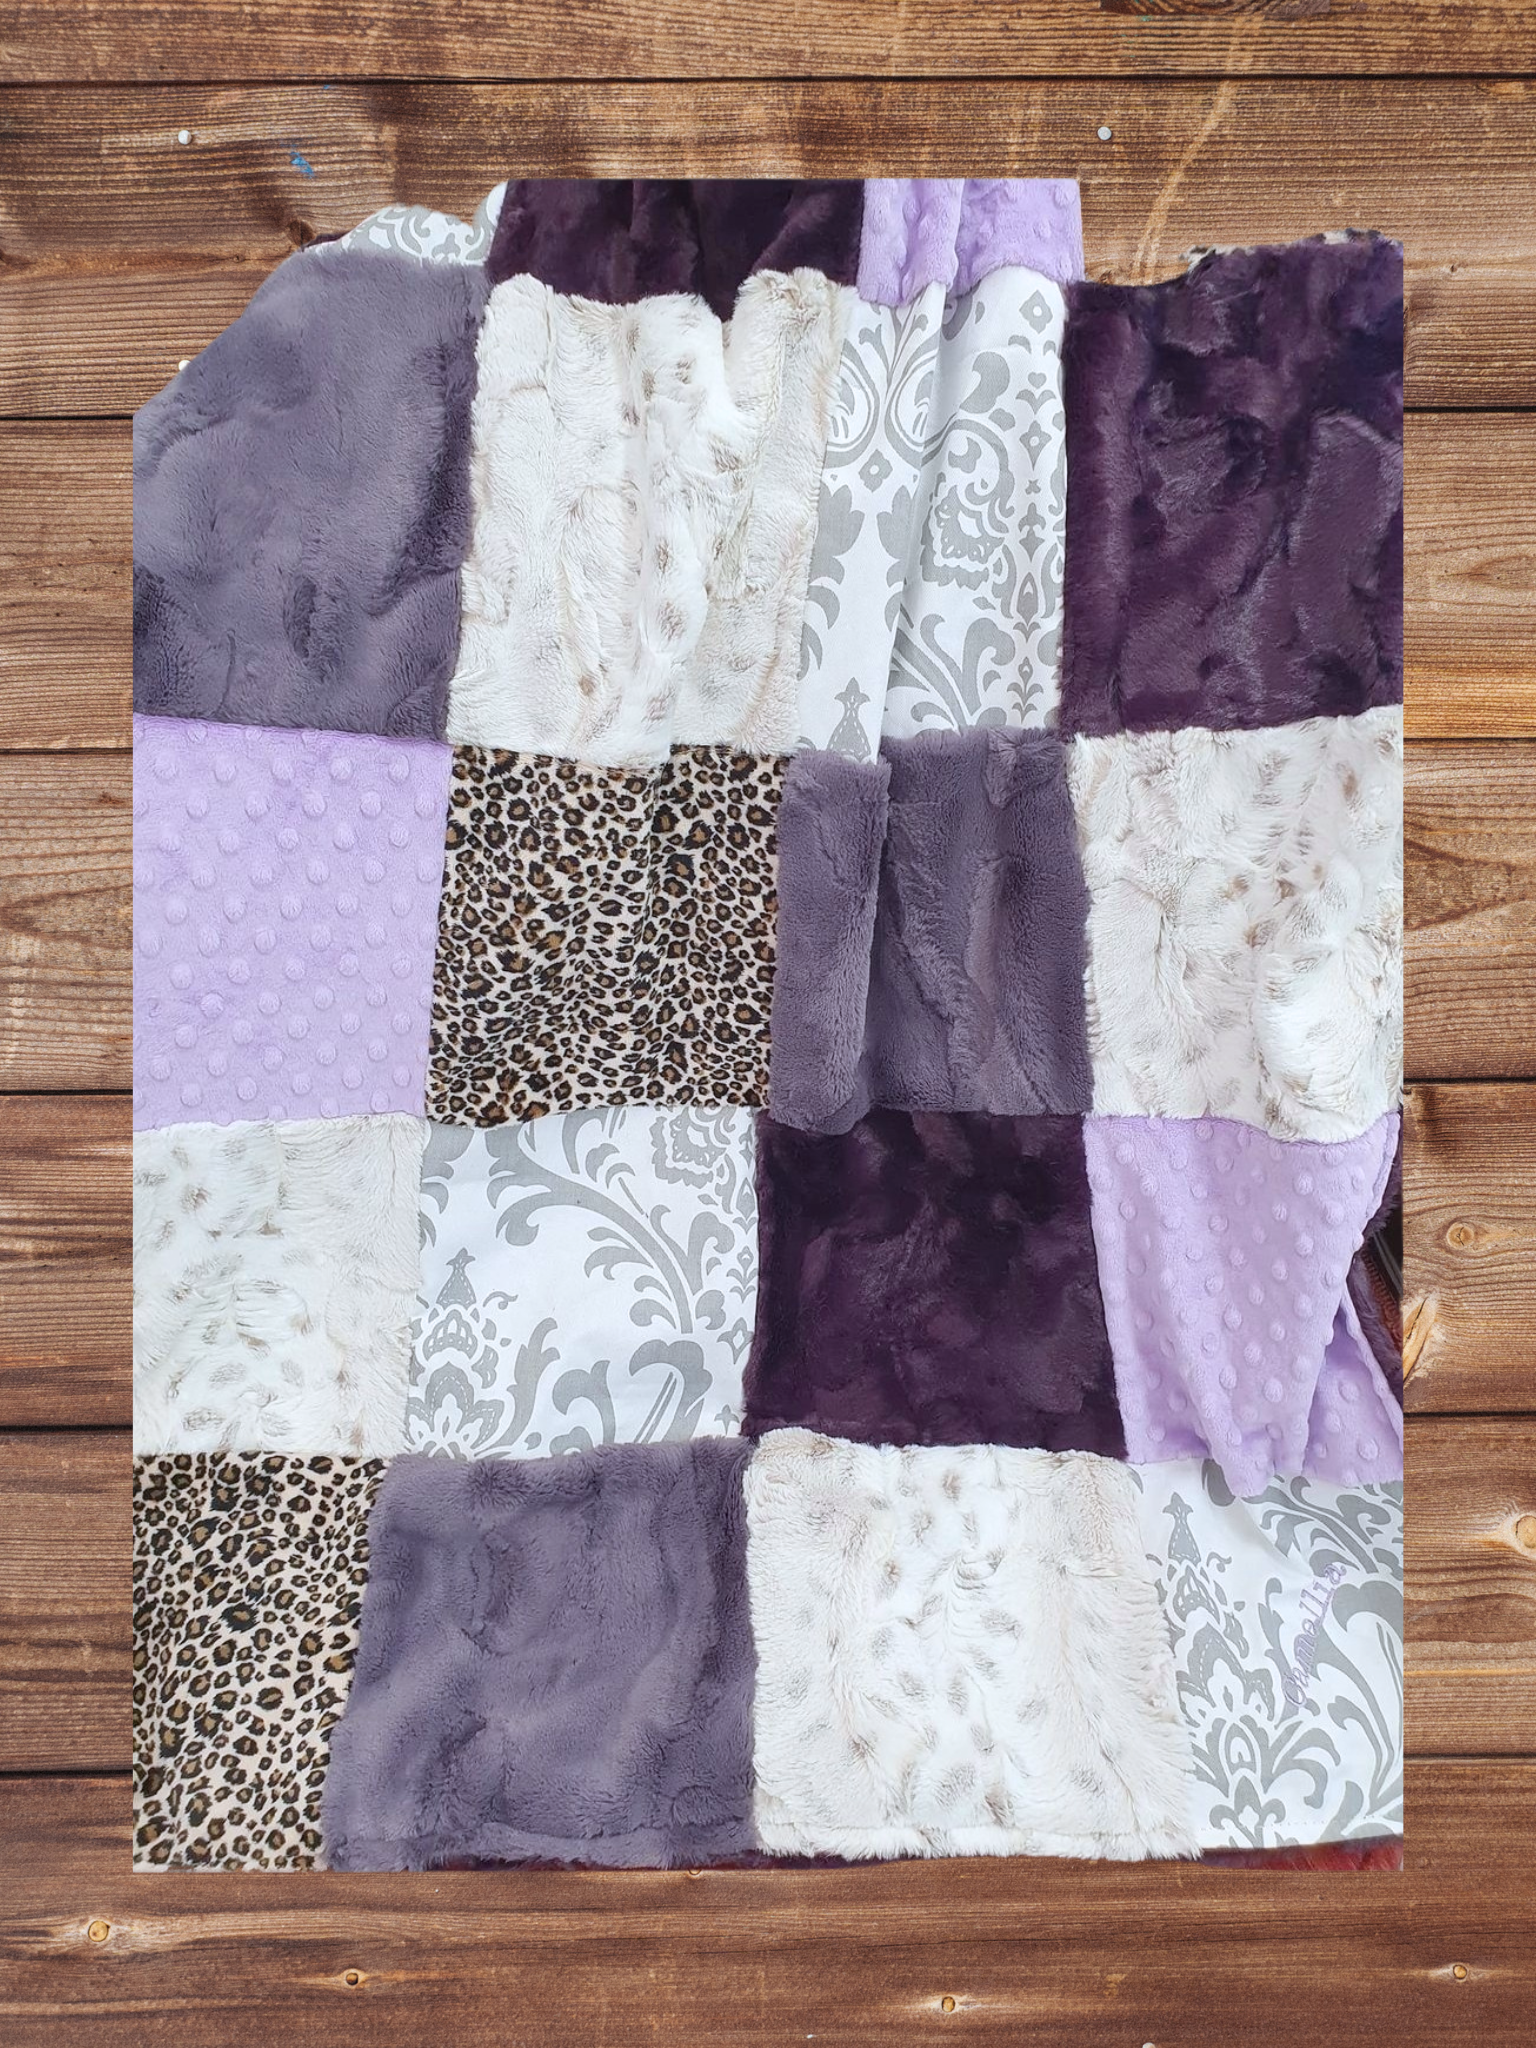 Patchwork Blanket - Lynx Minky and Cheetah Minky Blanket - DBC Baby Bedding Co 